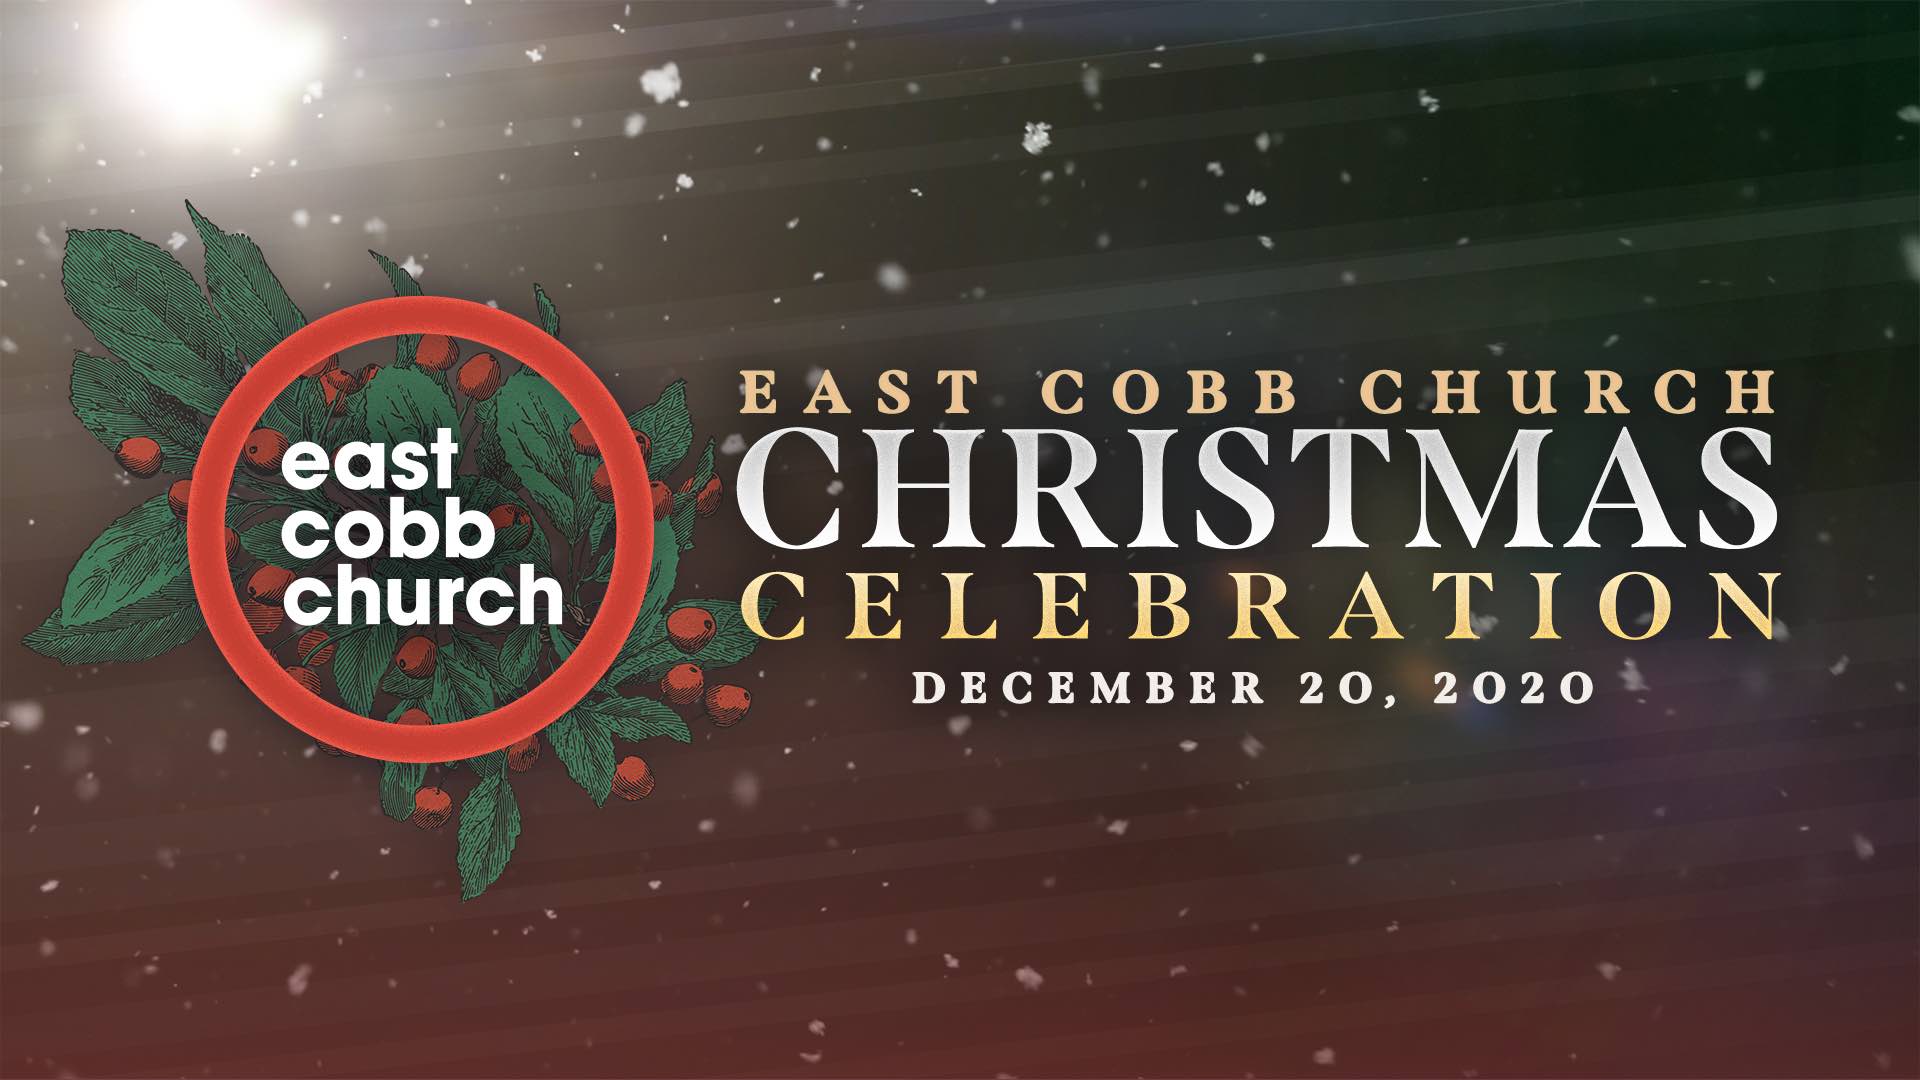 East Cobb Church Christmas Celebration